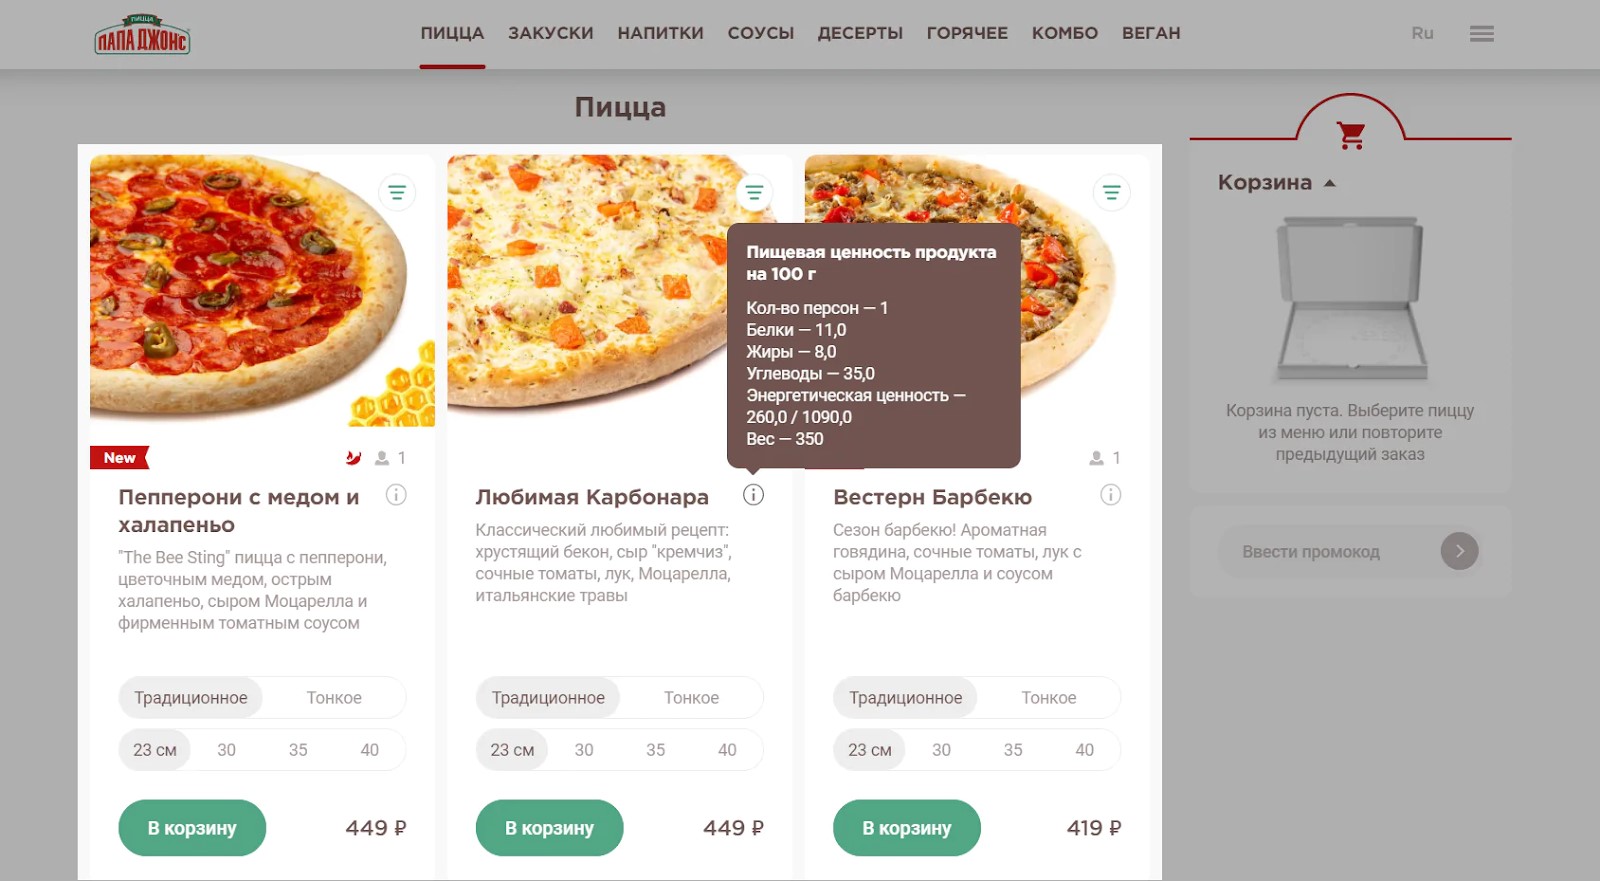 Карточка товара для онлайн-магазина пиццы